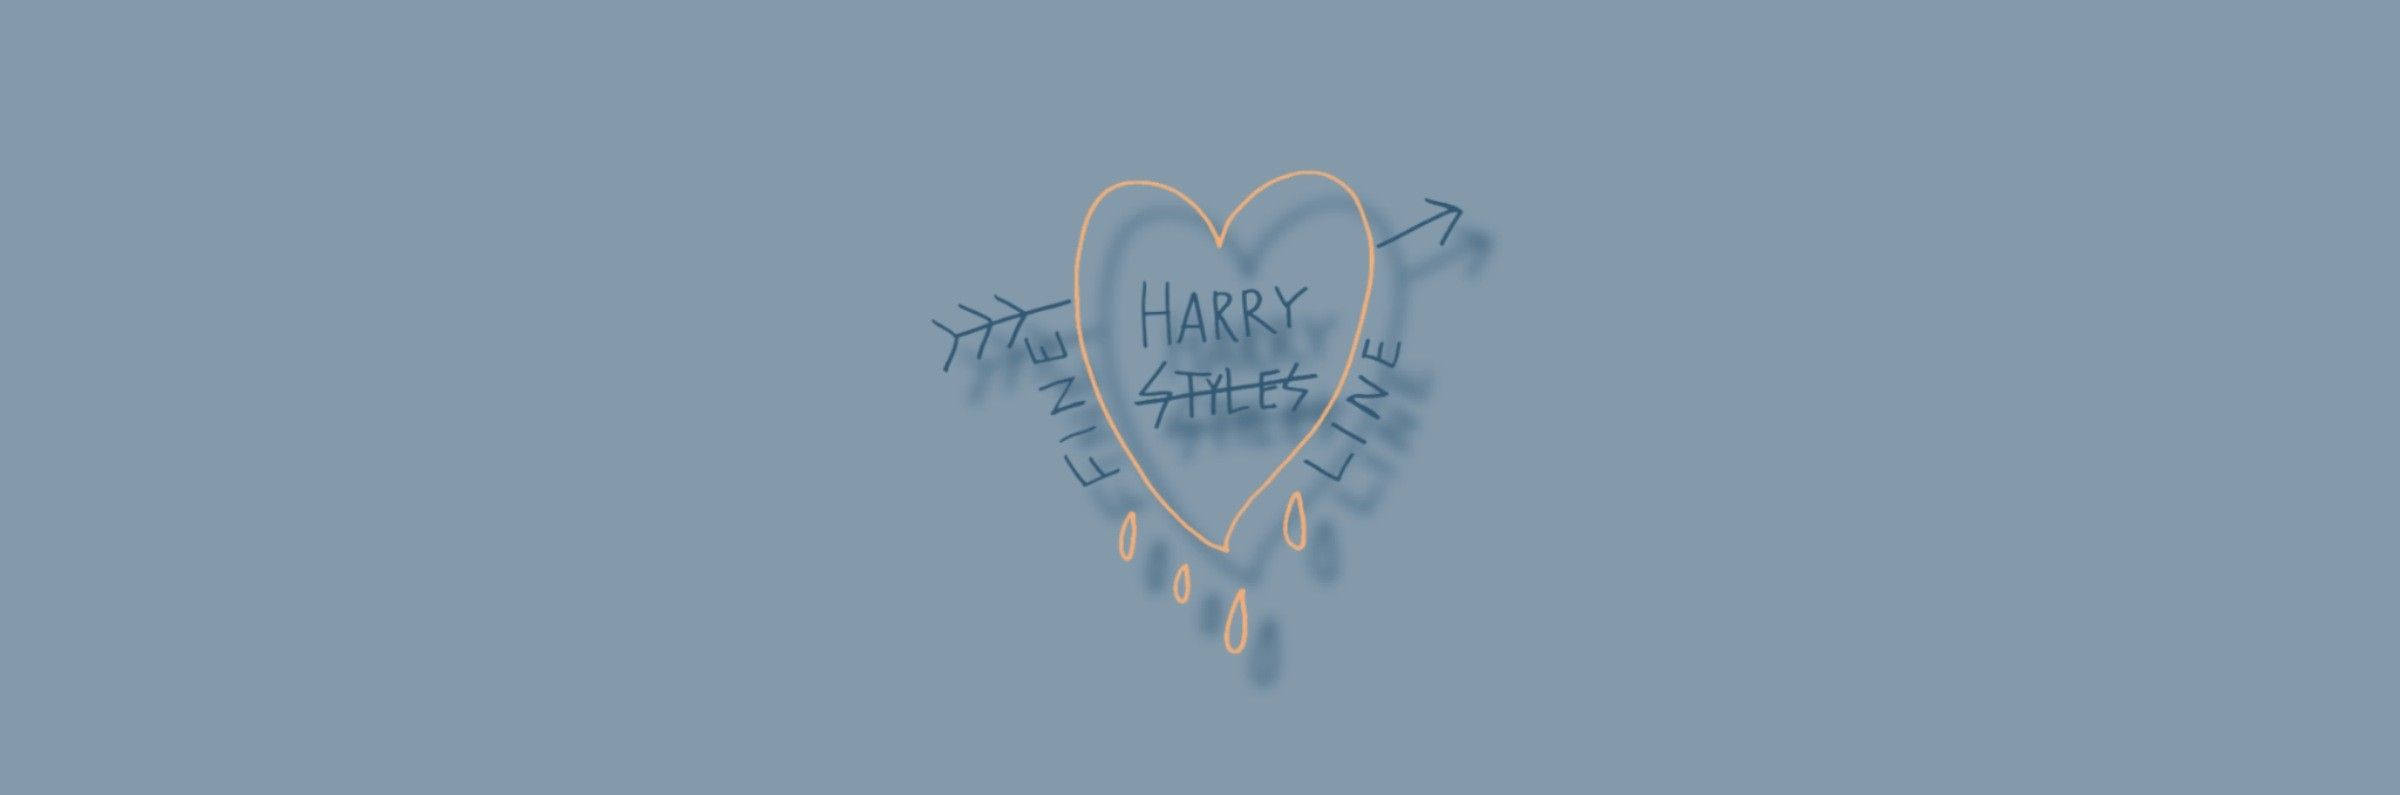 Harry Styles Fine Line Twitter Header Wallpaper